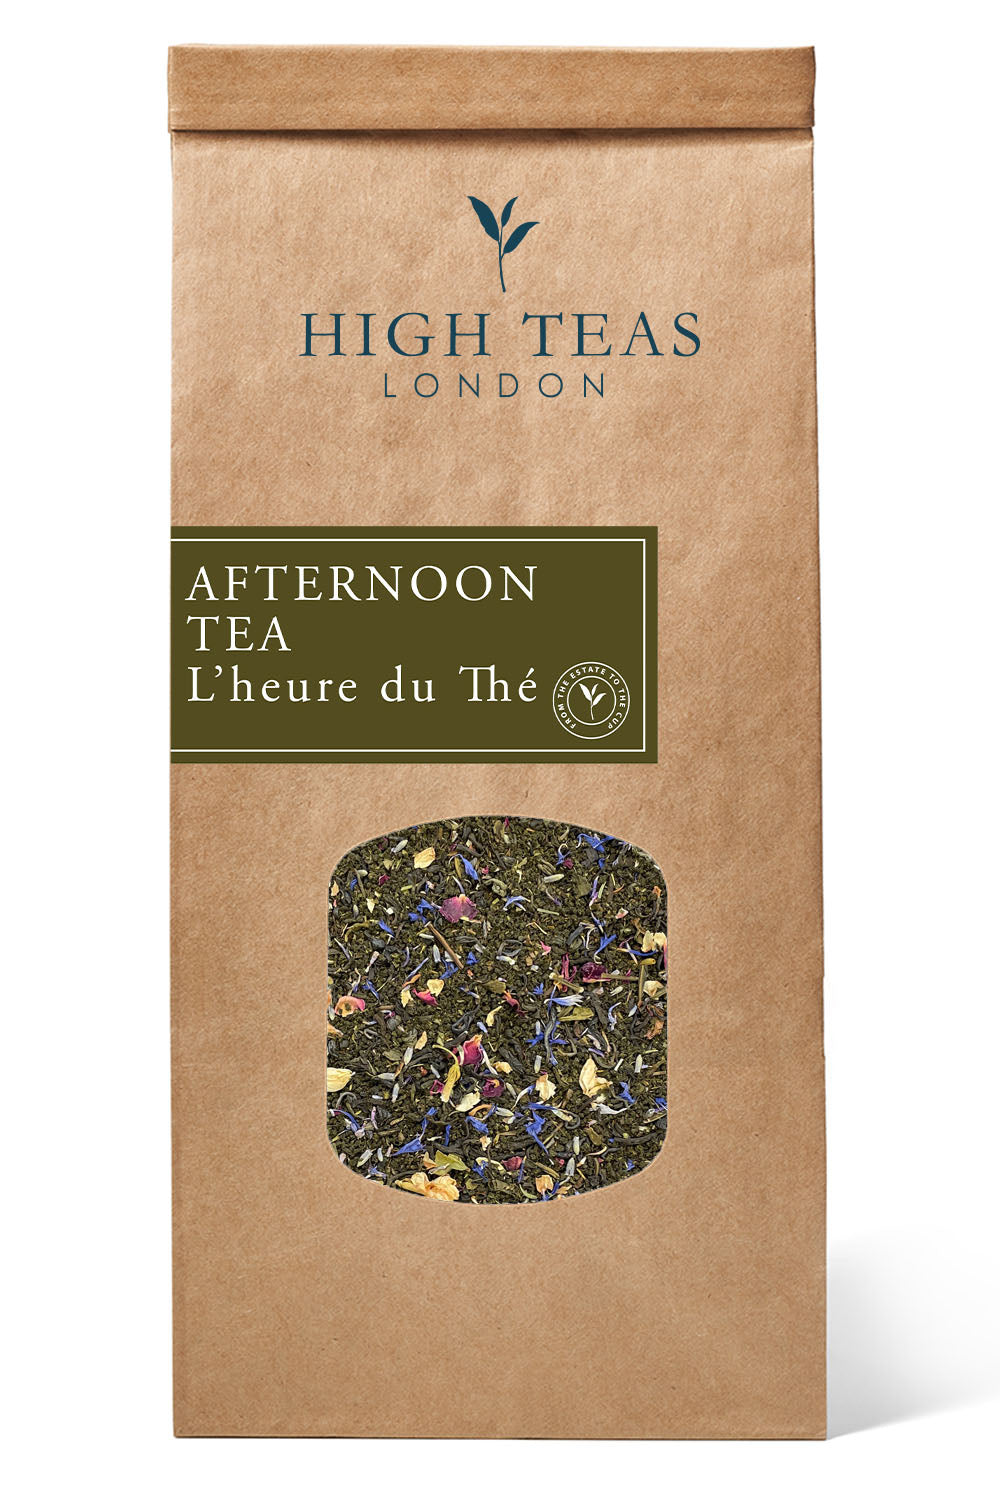 French Afternoon Tea, aka L'Heure du Thé.-250g-Loose Leaf Tea-High Teas